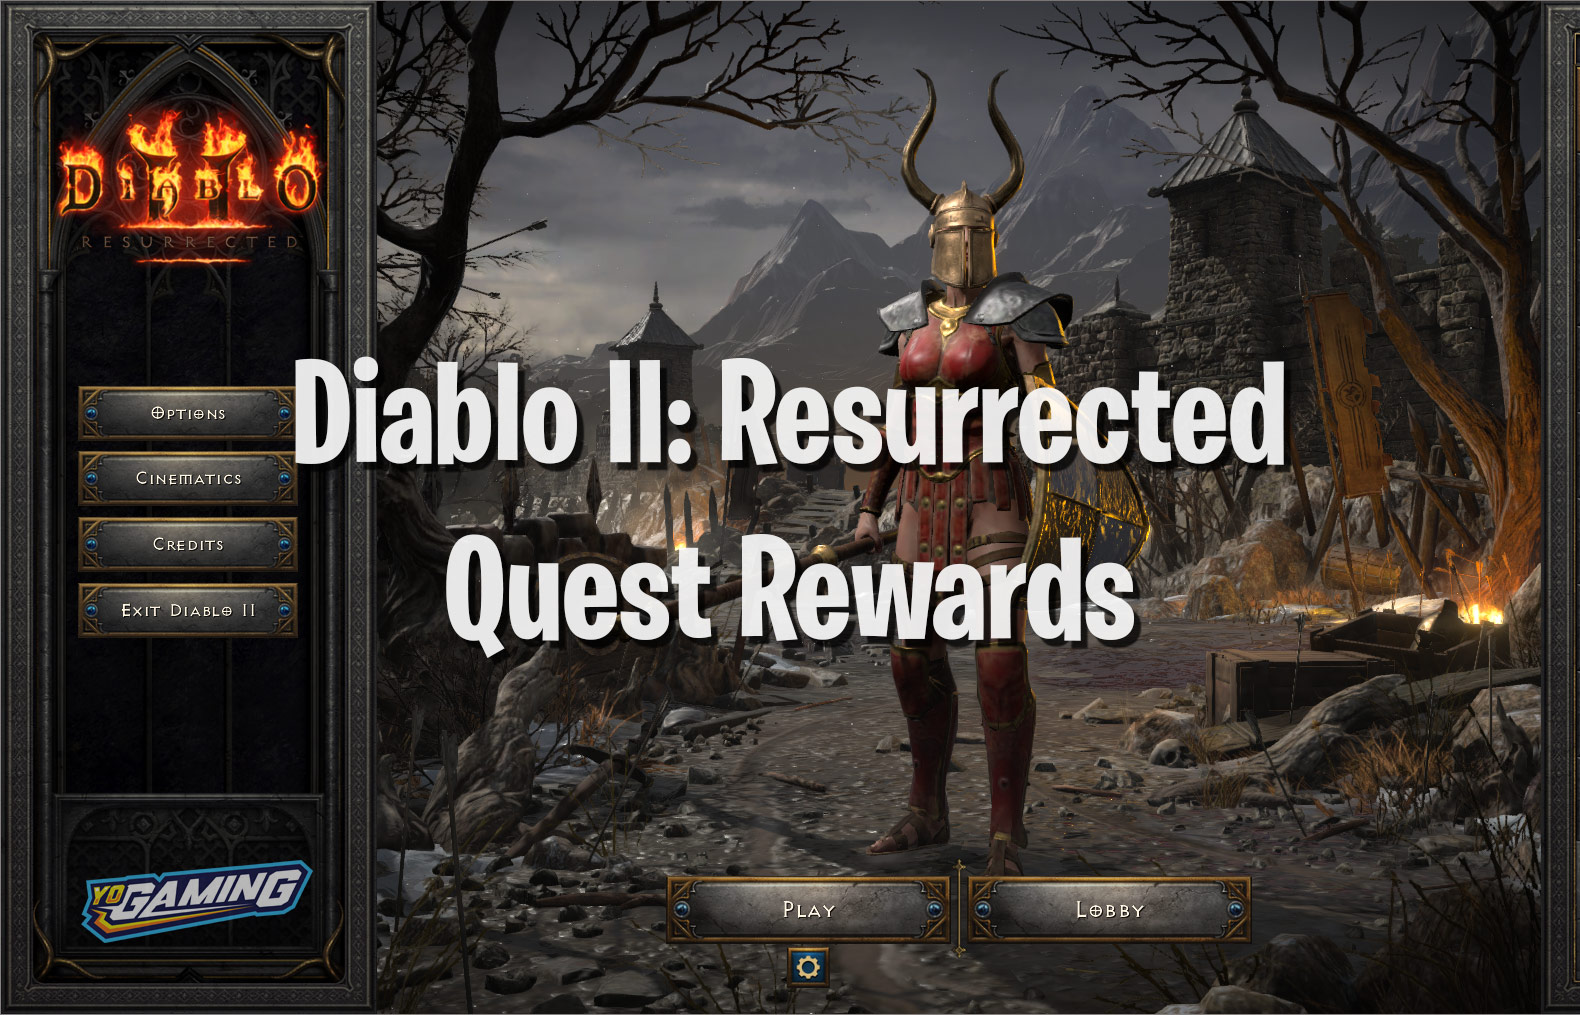 Diablo II: Resurrected Quest Rewards